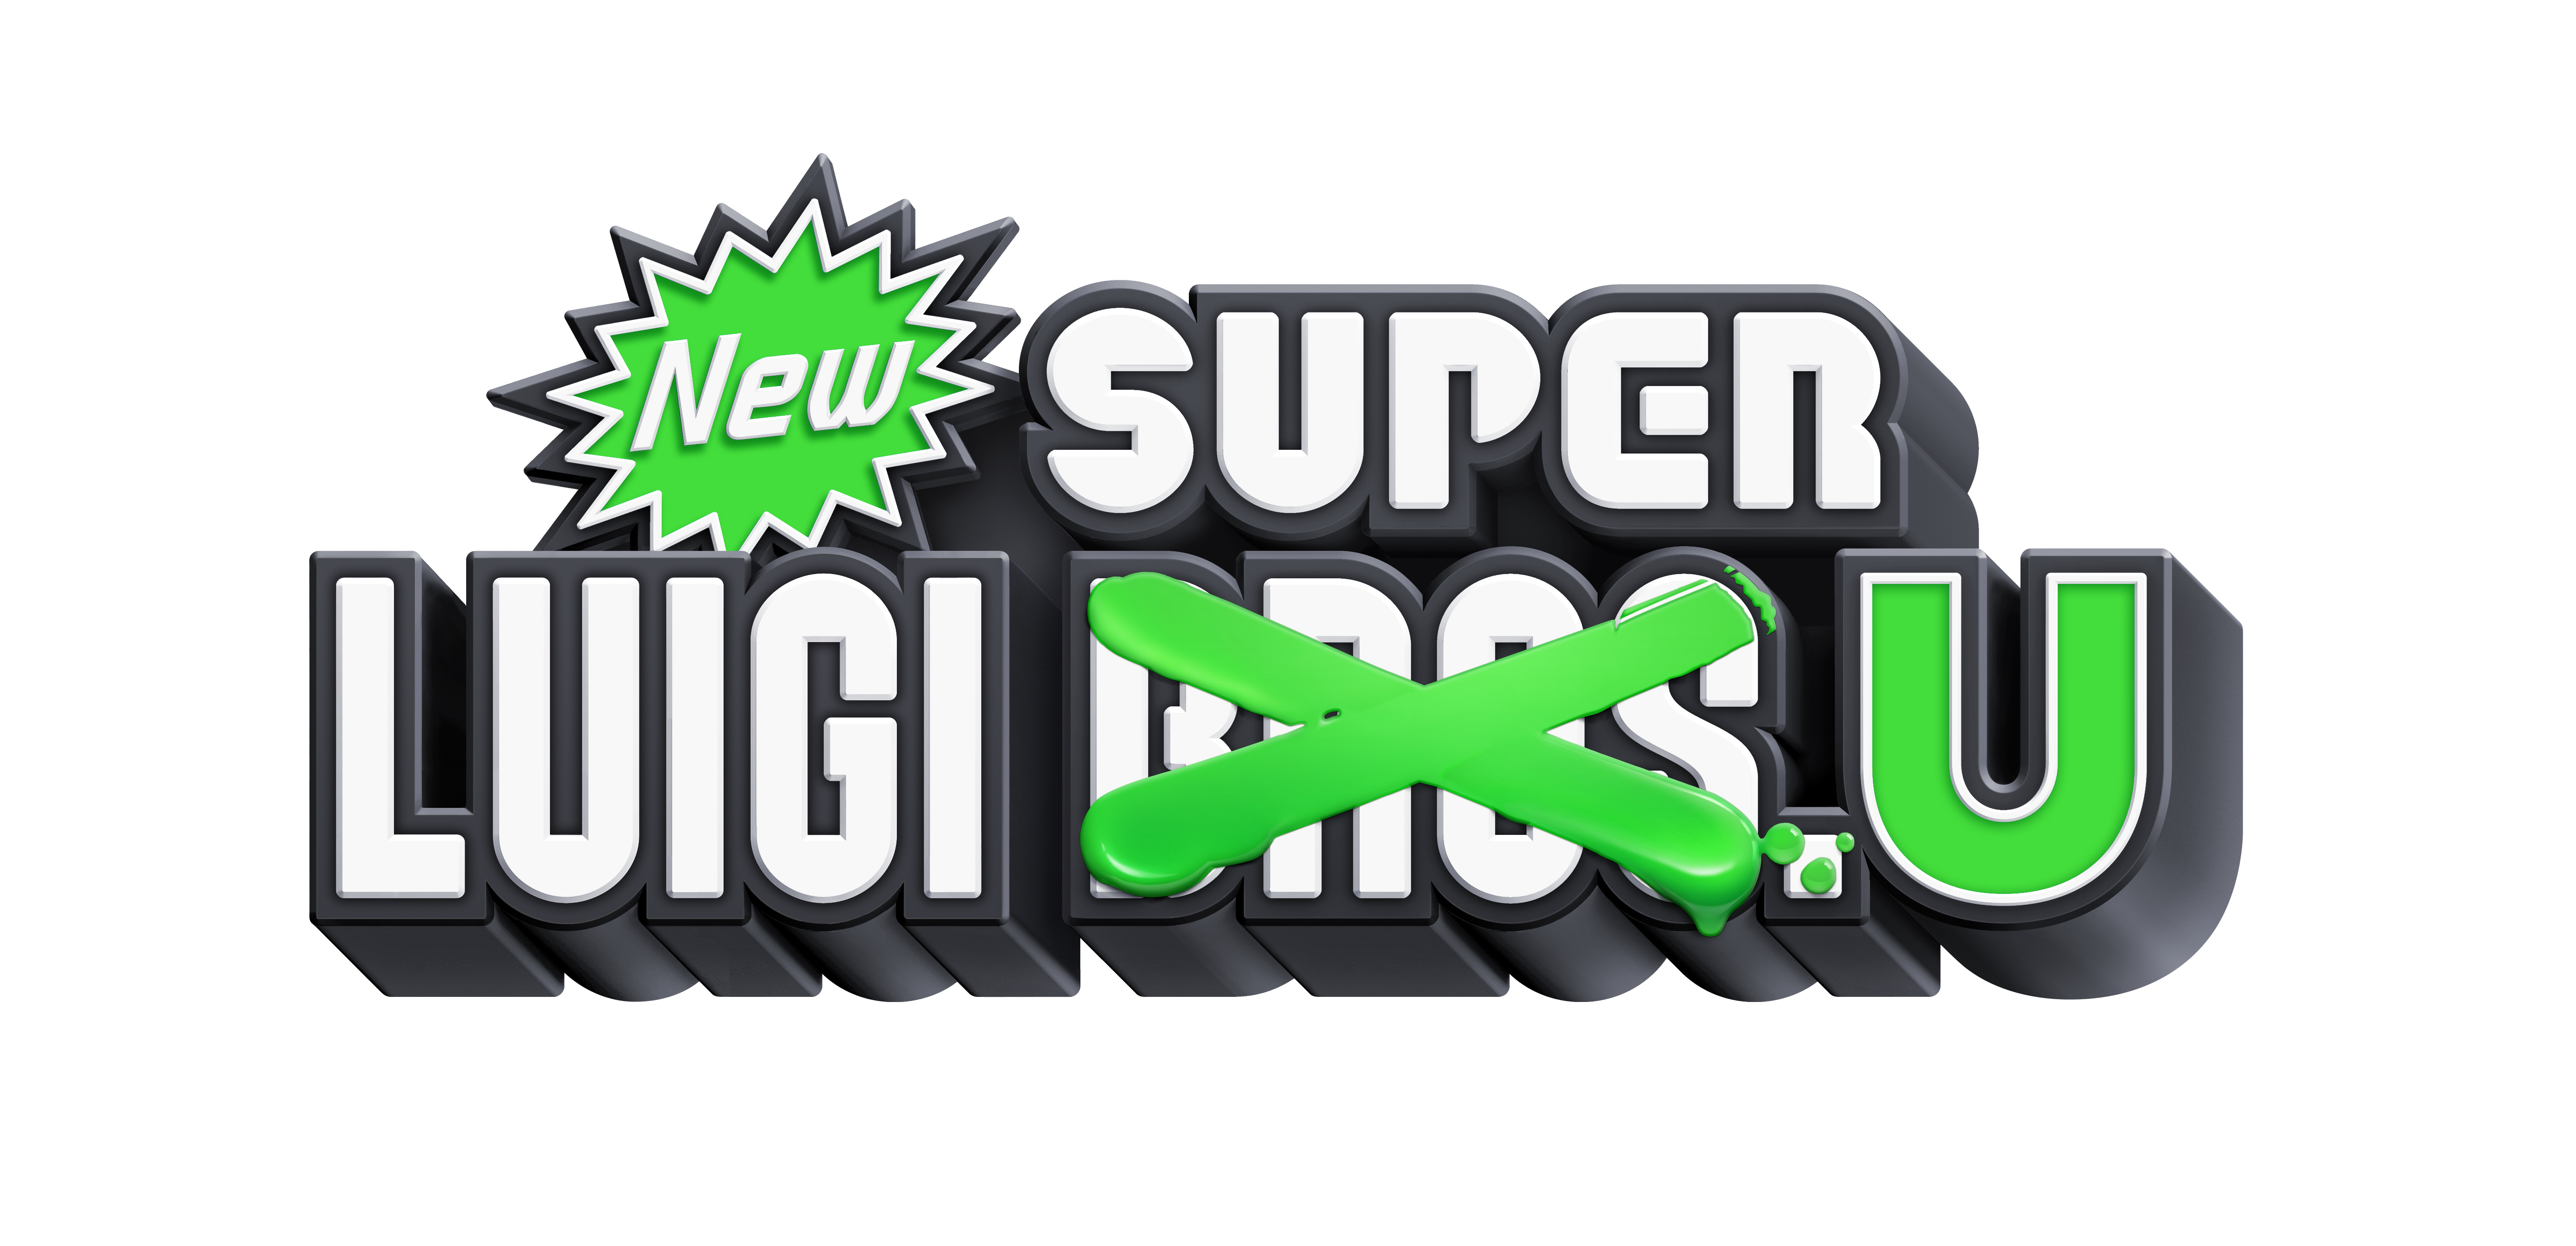 New Super Luigi U HD wallpapers, Desktop wallpaper - most viewed